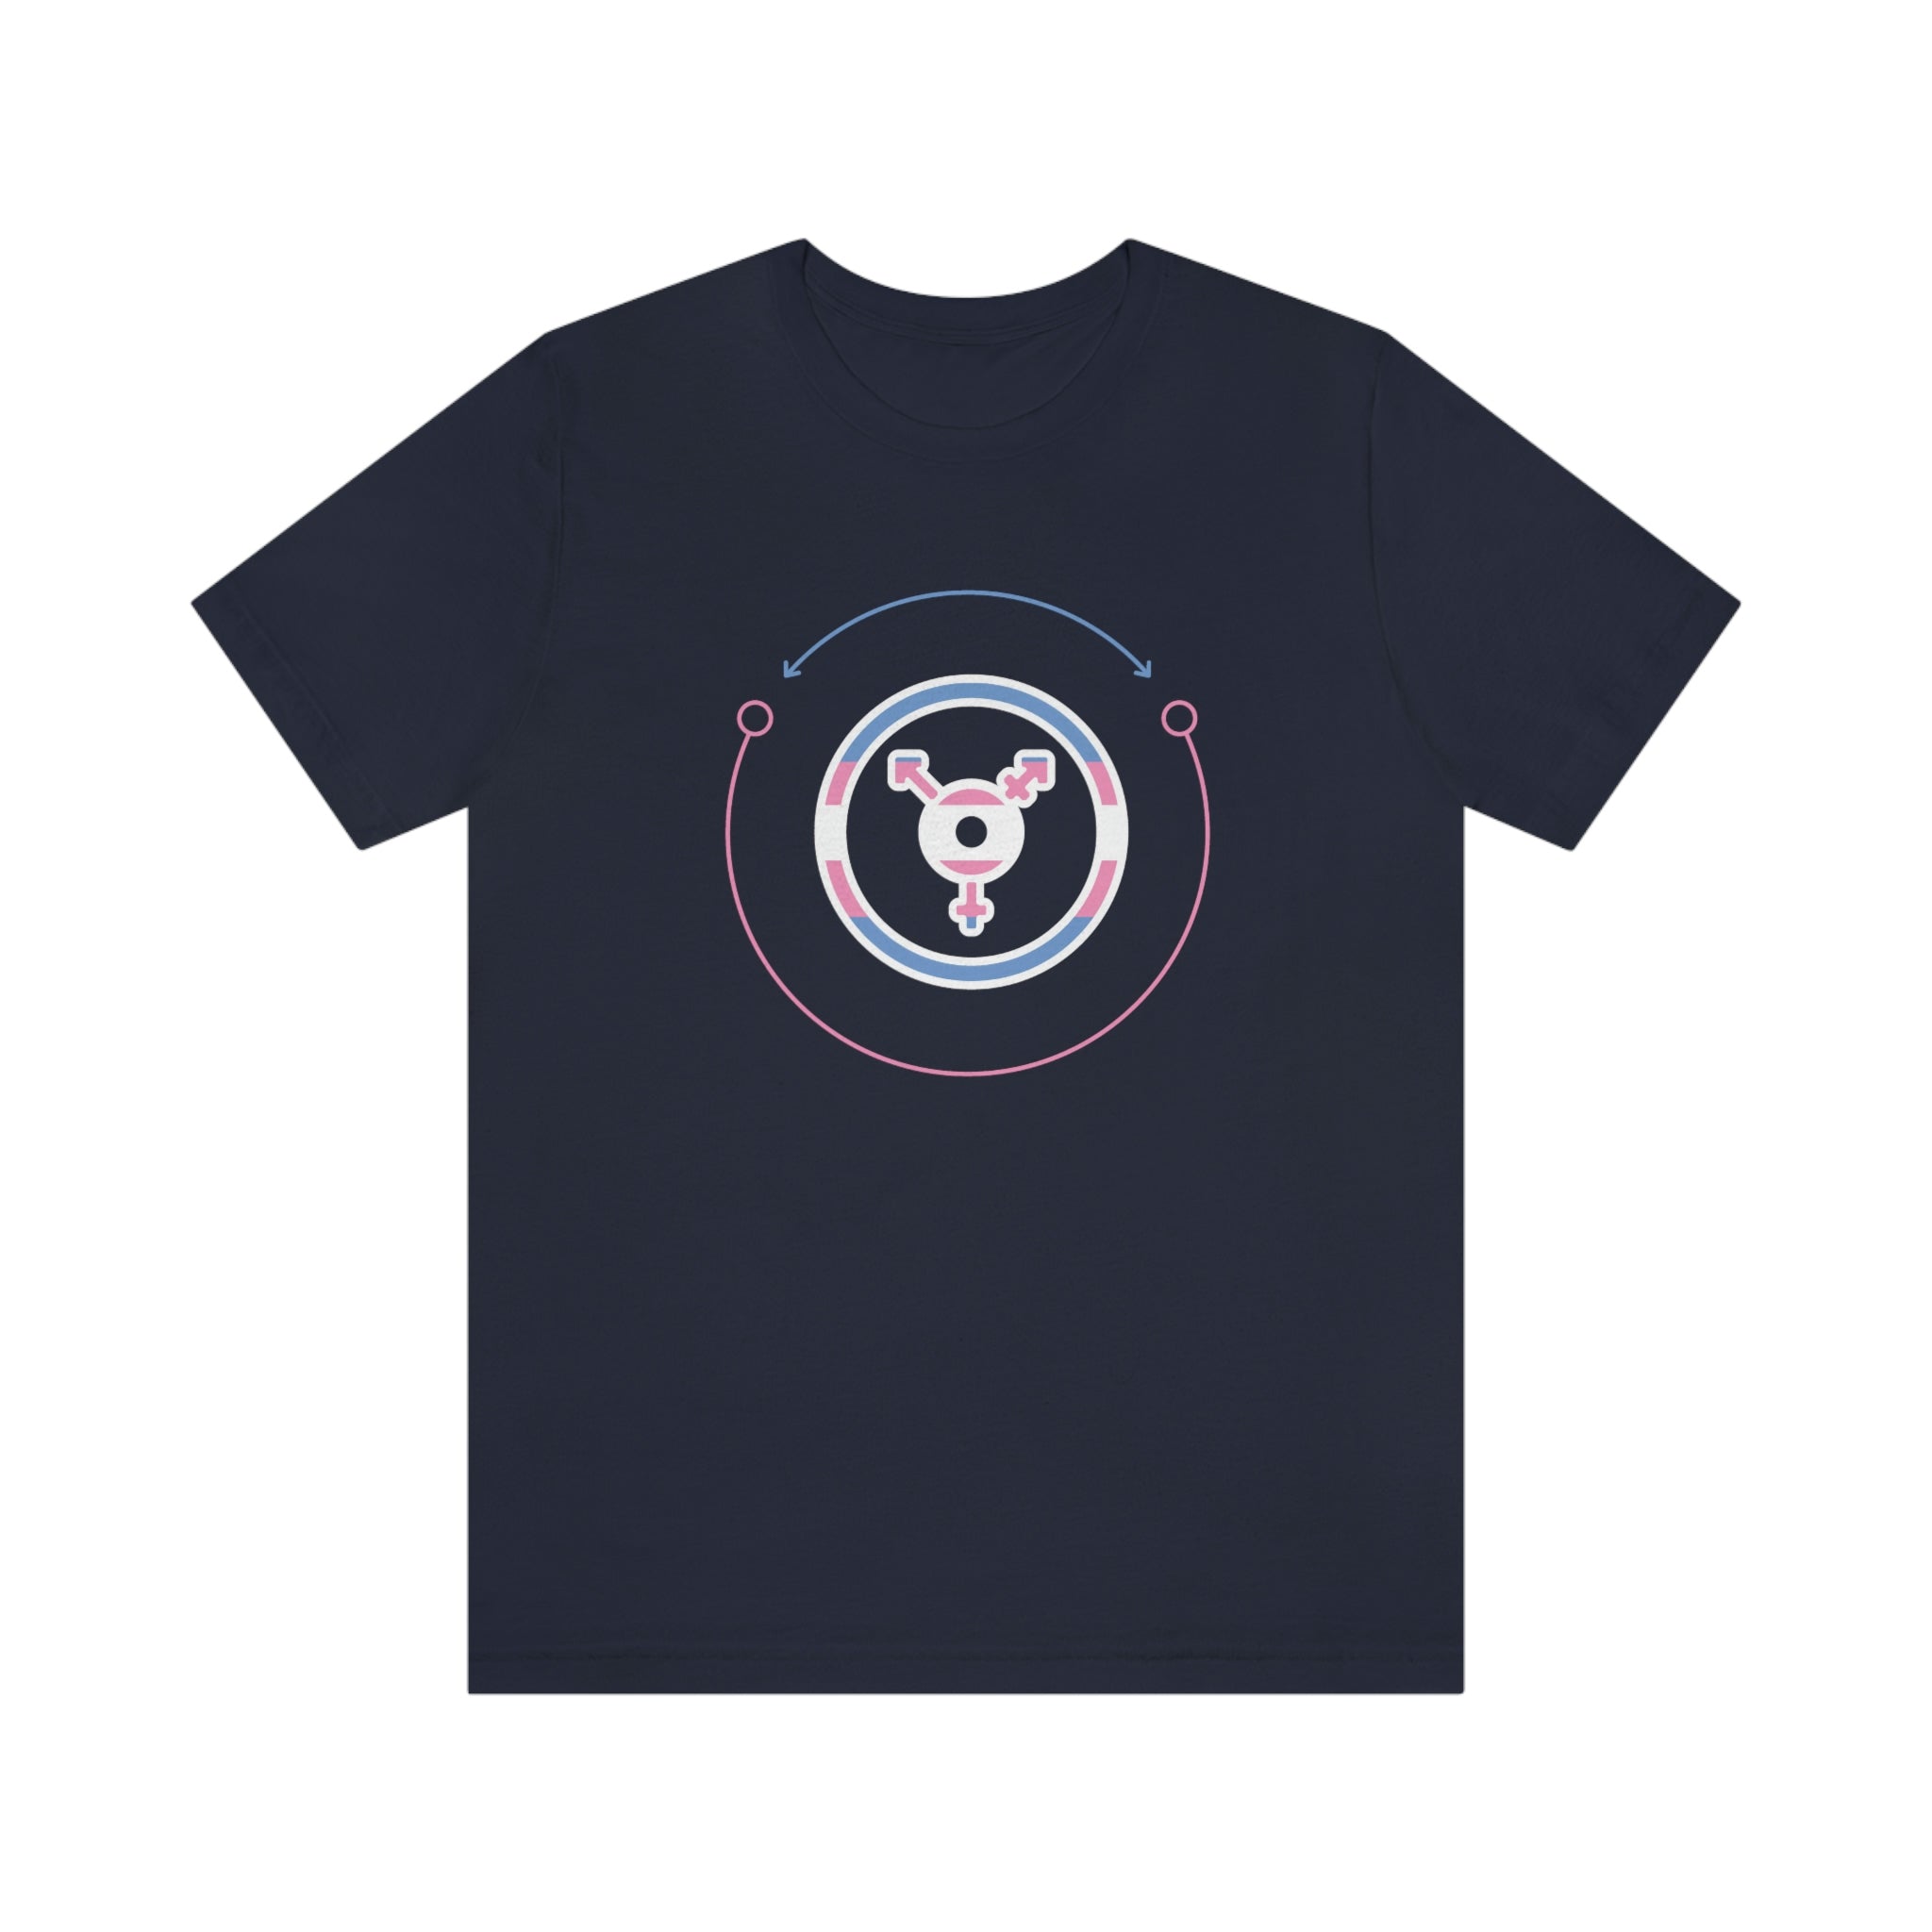 Trans Acceptance - Without Text : Unisex 100% Comfy Cotton T-Shirt by Bella+Canvas